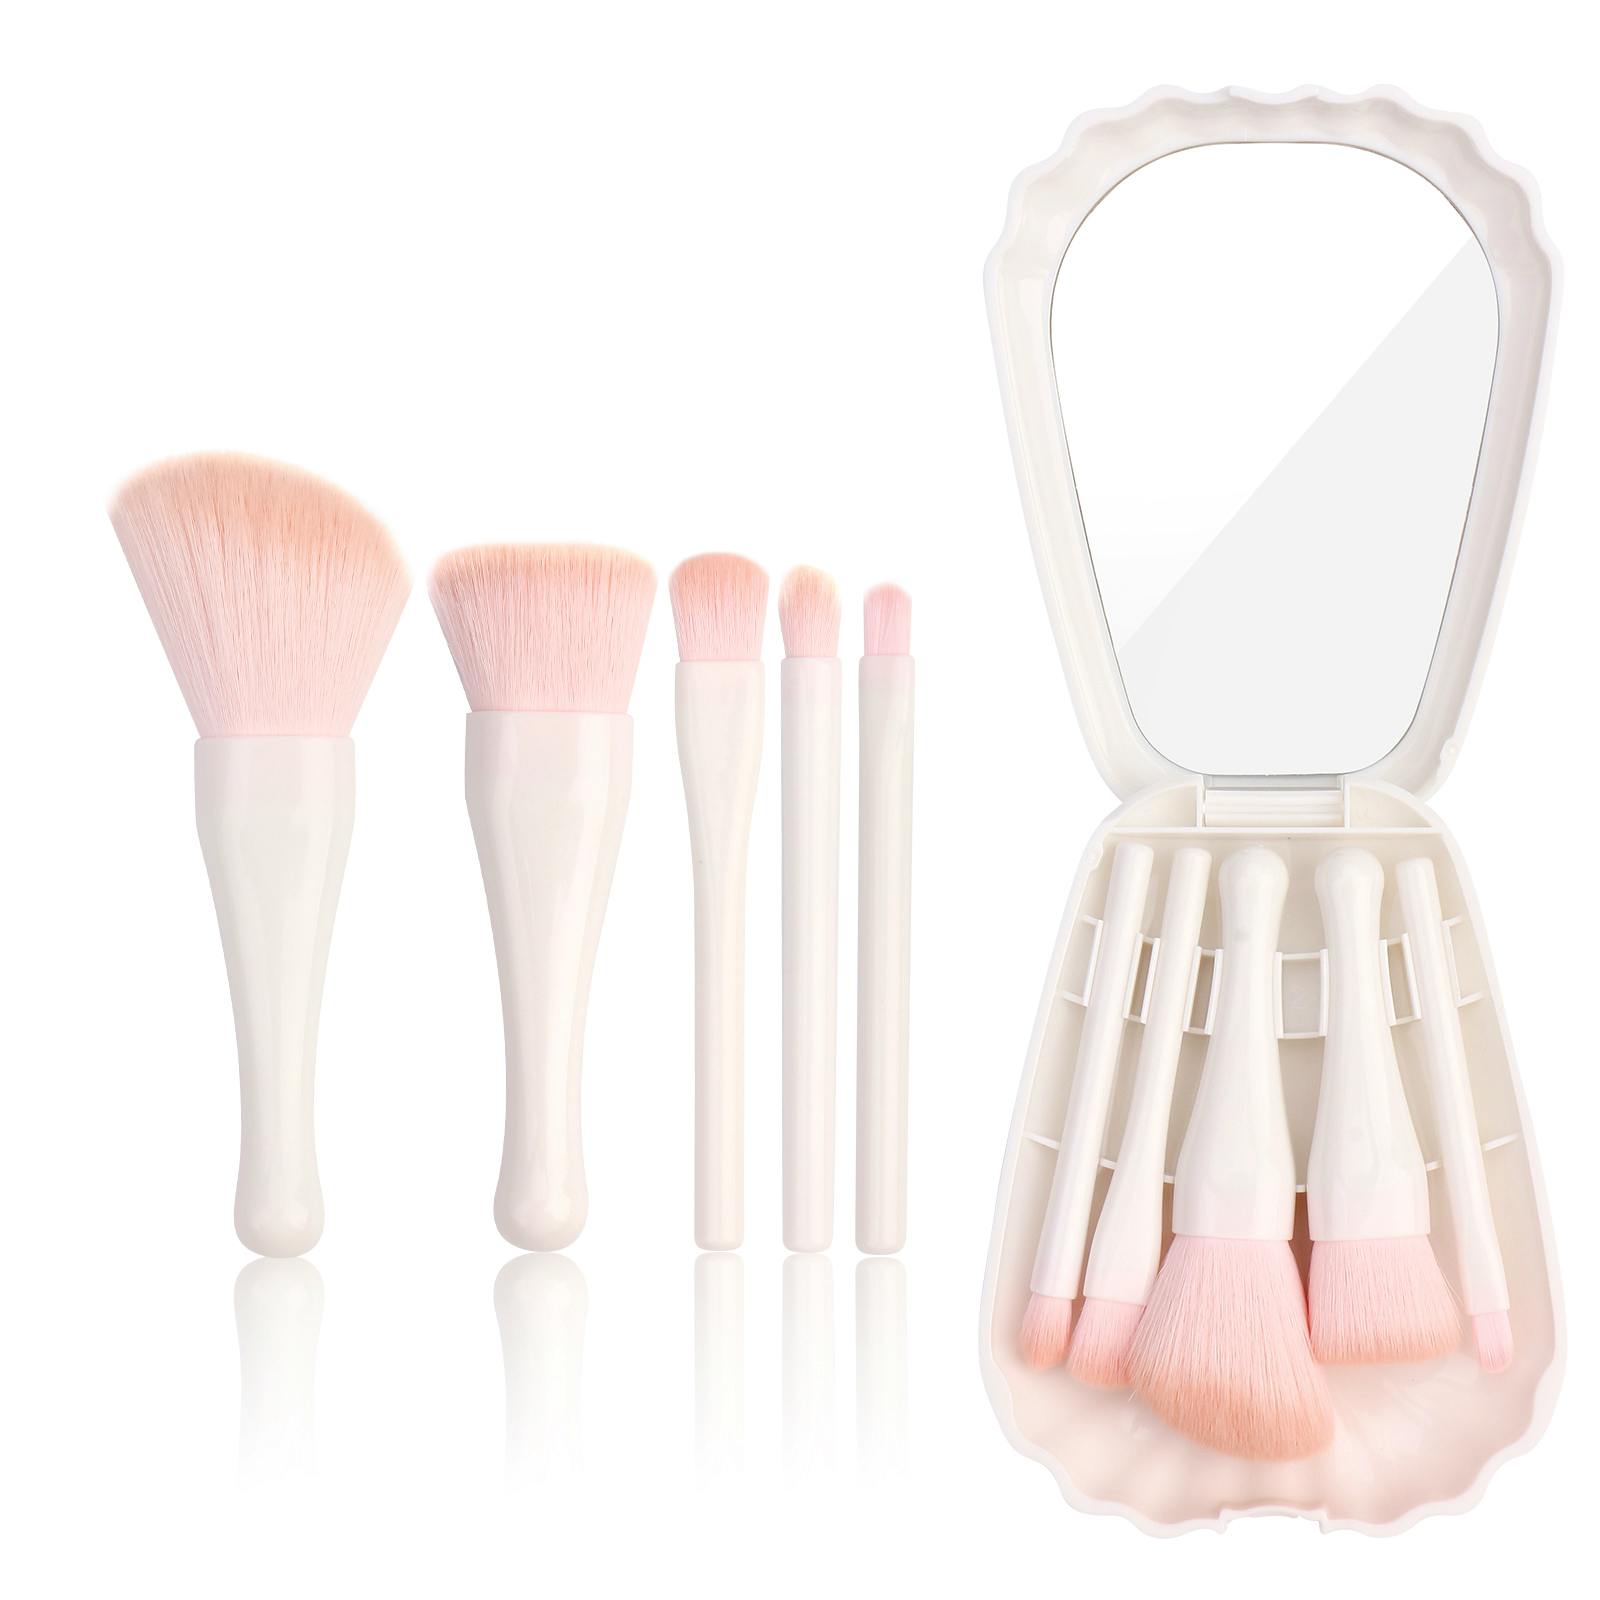 Basics Makeup Brush With Mirror 4 4 stk - 74.95 kr